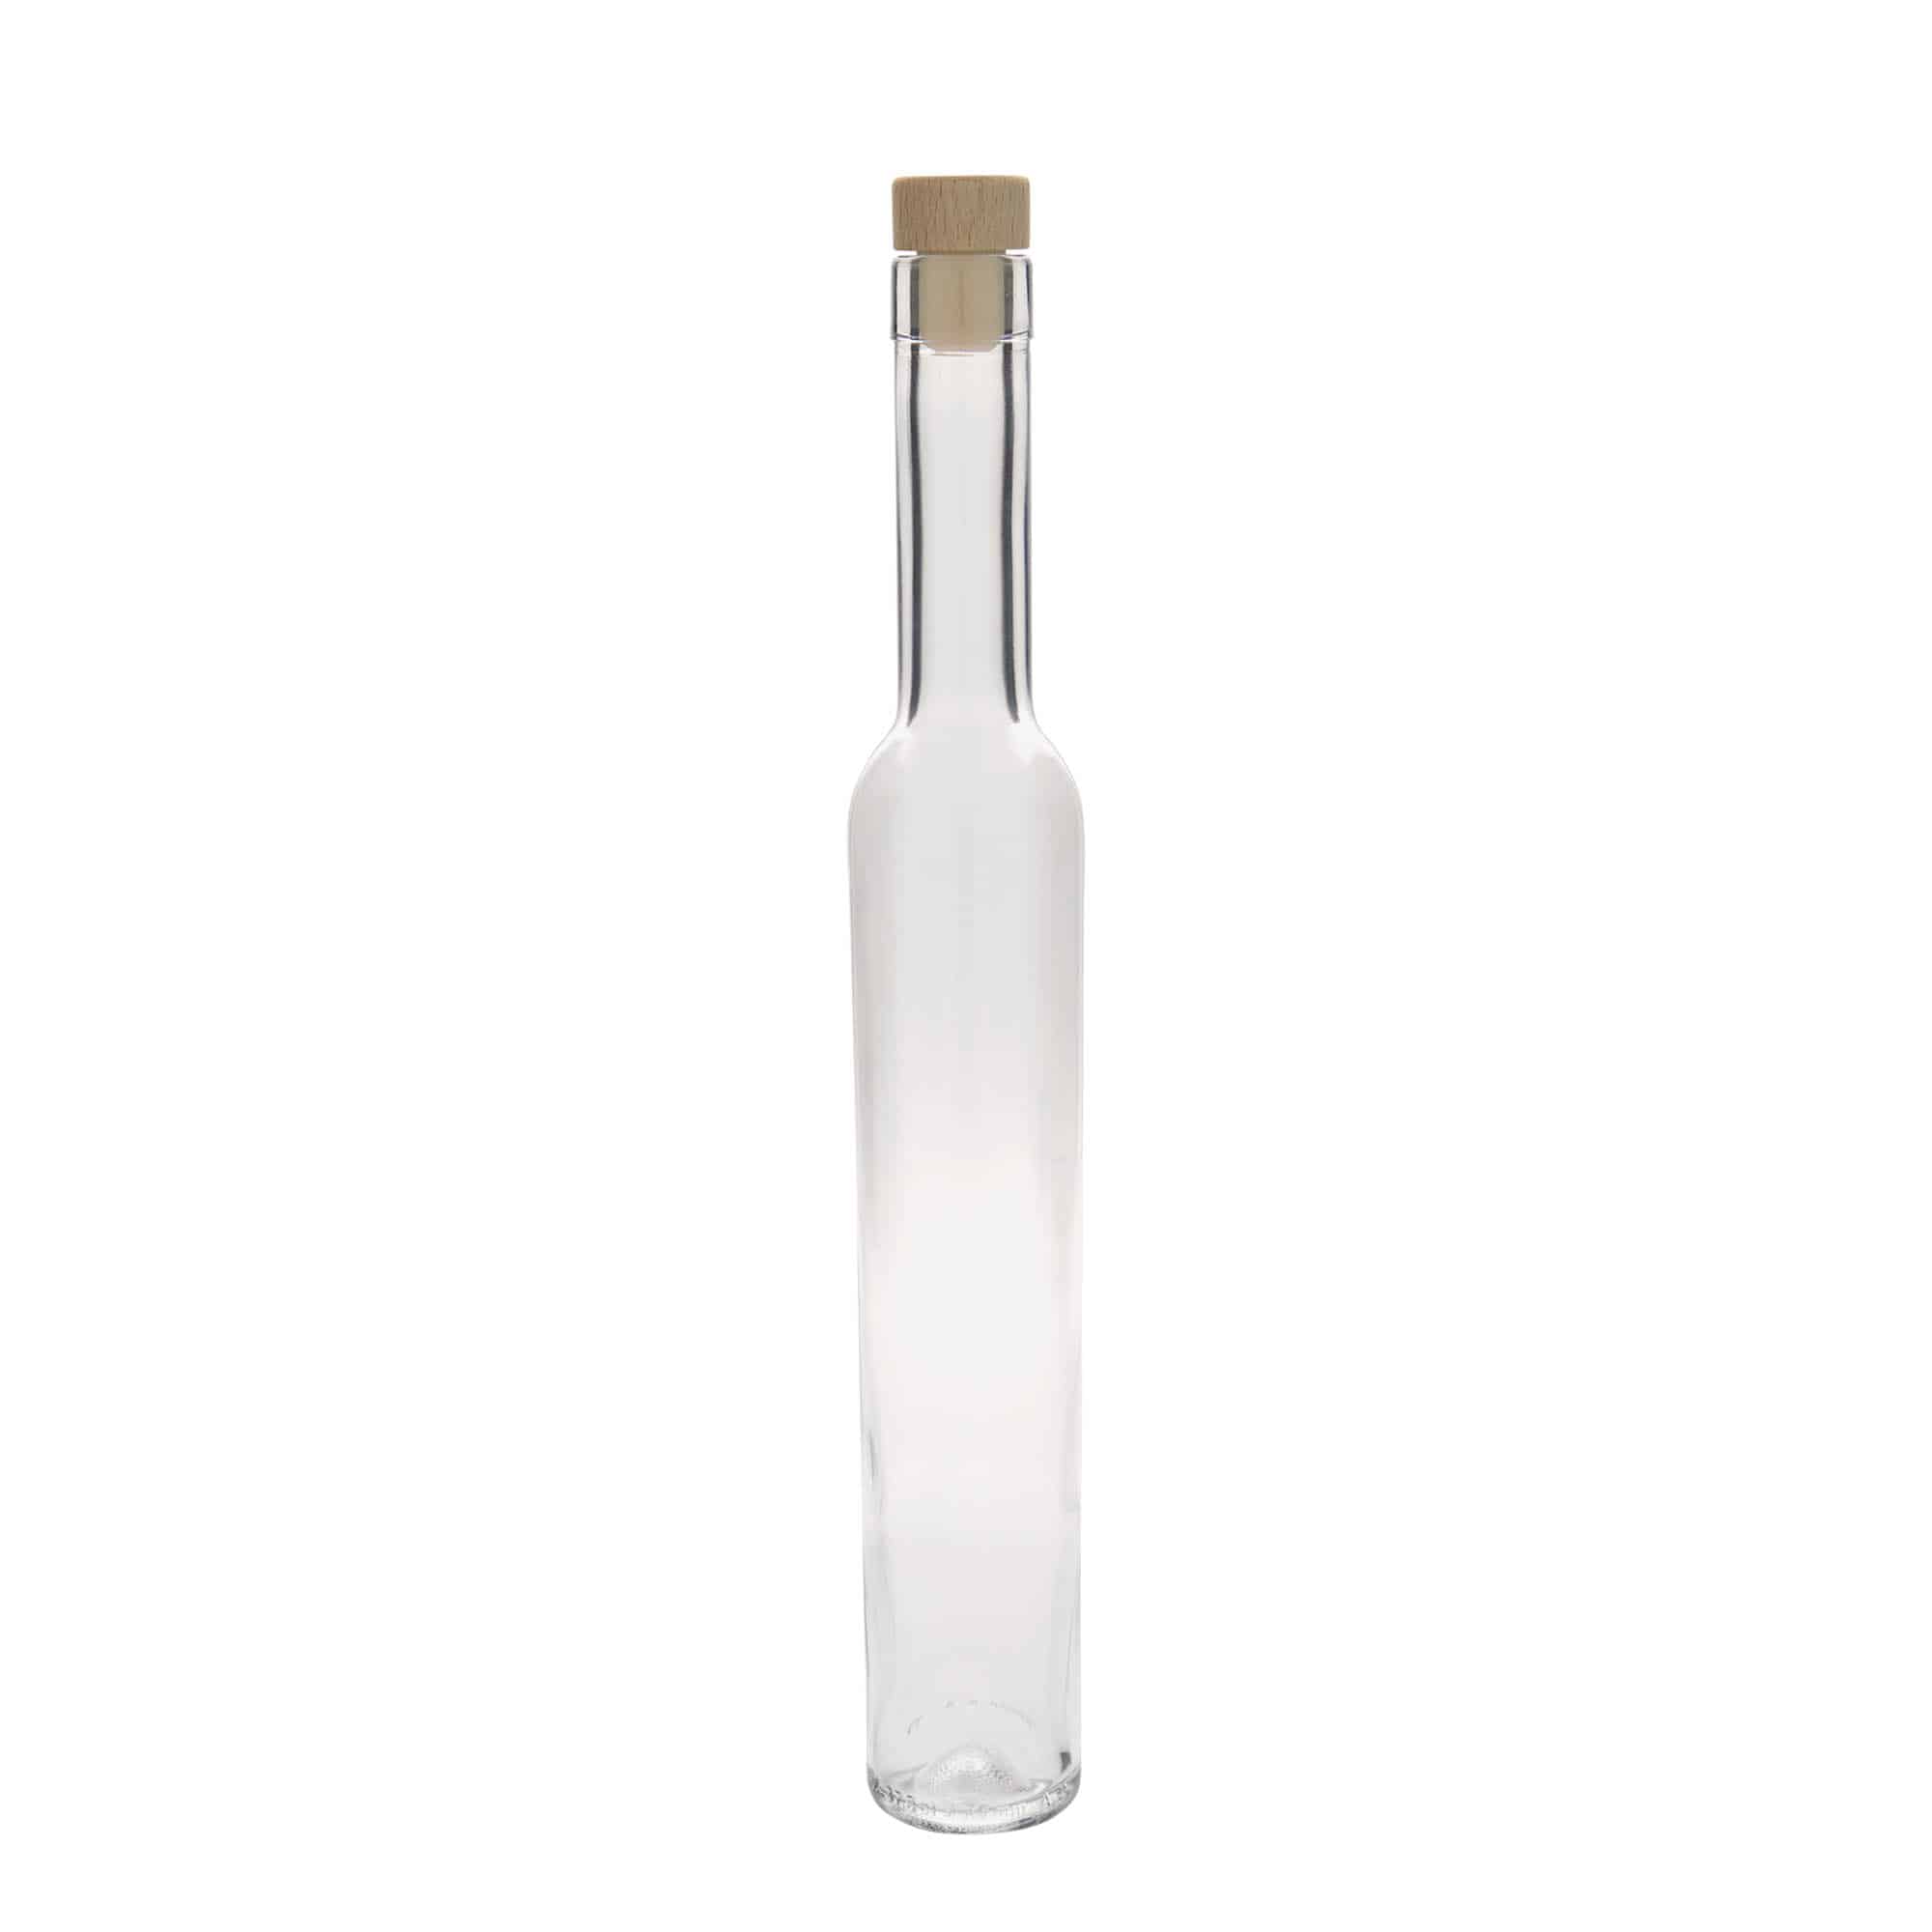 375 ml glass bottle 'Maximo', closure: cork